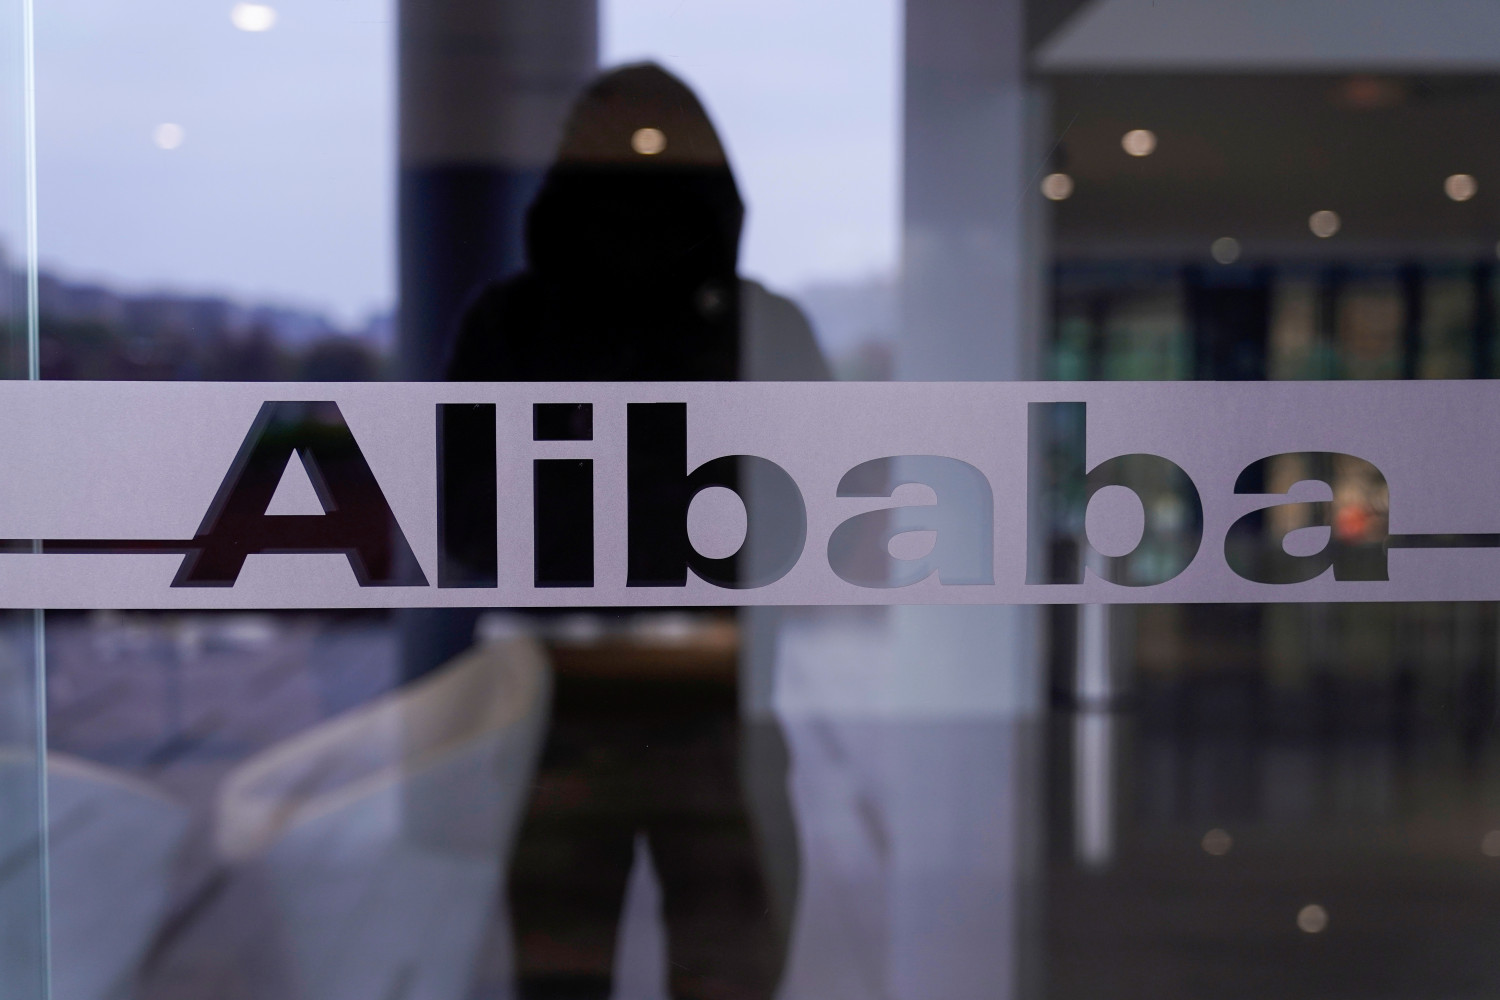 https://img6.s3wfg.com/web/img/images_uploaded/3/7/alibaba-va-investir-28-milliards-de-dollars-pour-ses-activites-de-cloud_20210412132609_rsz.jpg